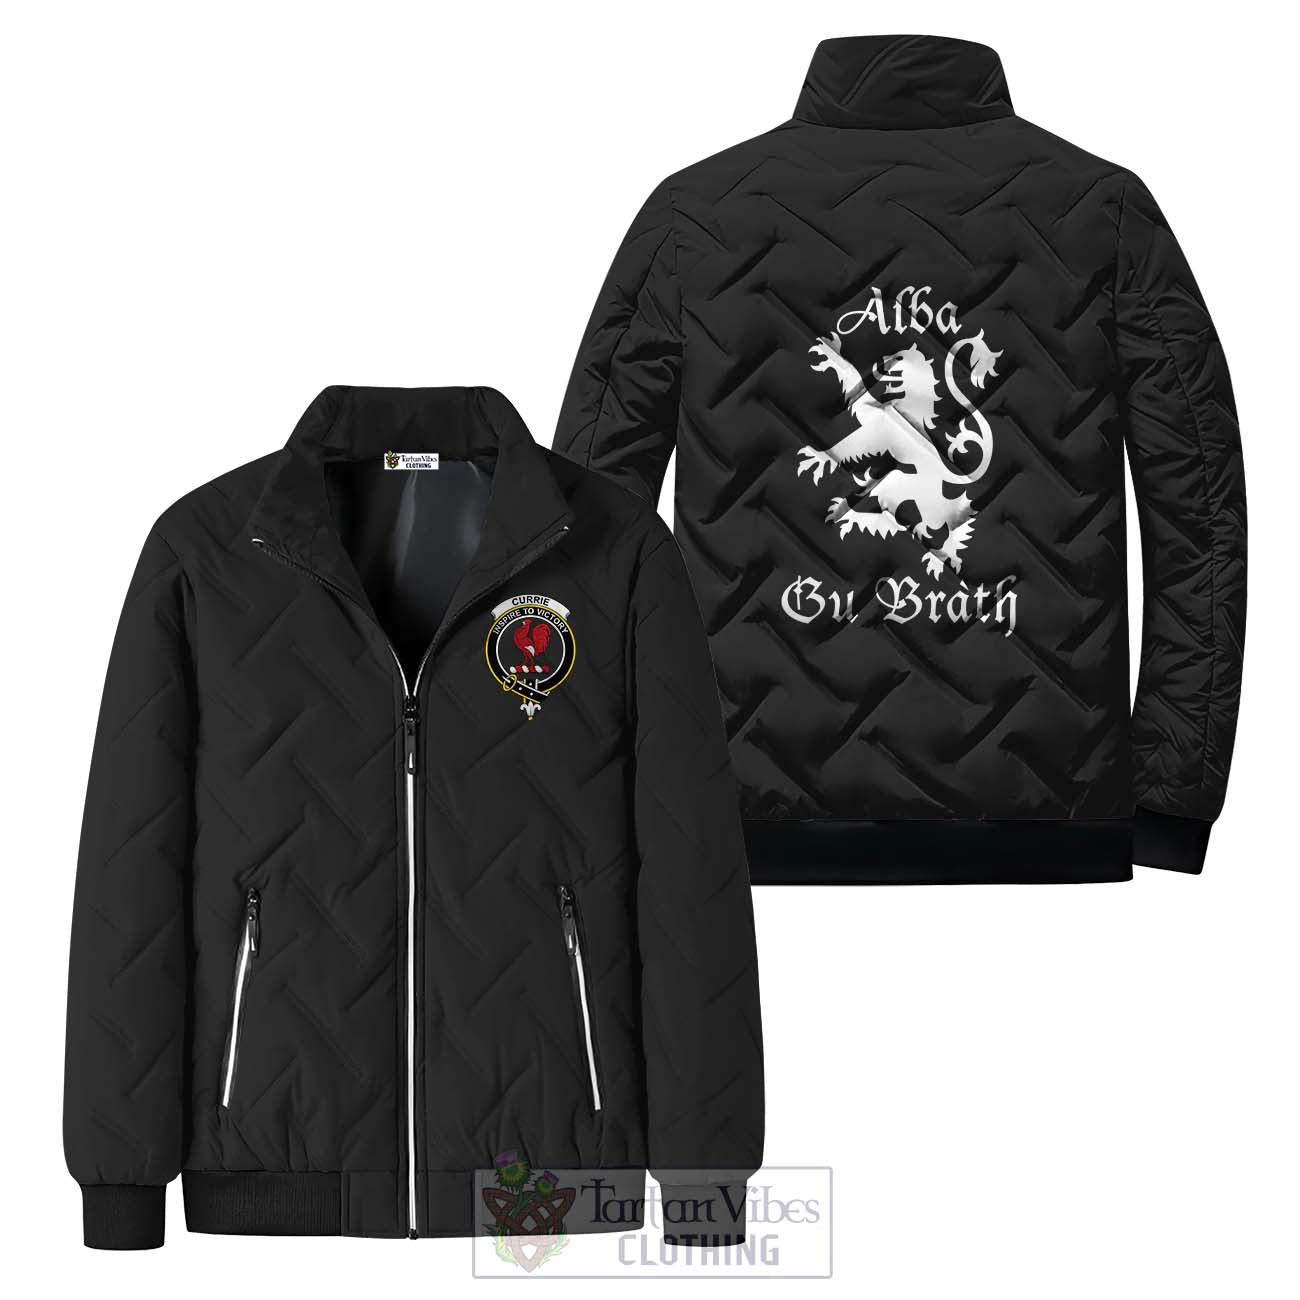 Tartan Vibes Clothing Currie Family Crest Padded Cotton Jacket Lion Rampant Alba Gu Brath Style